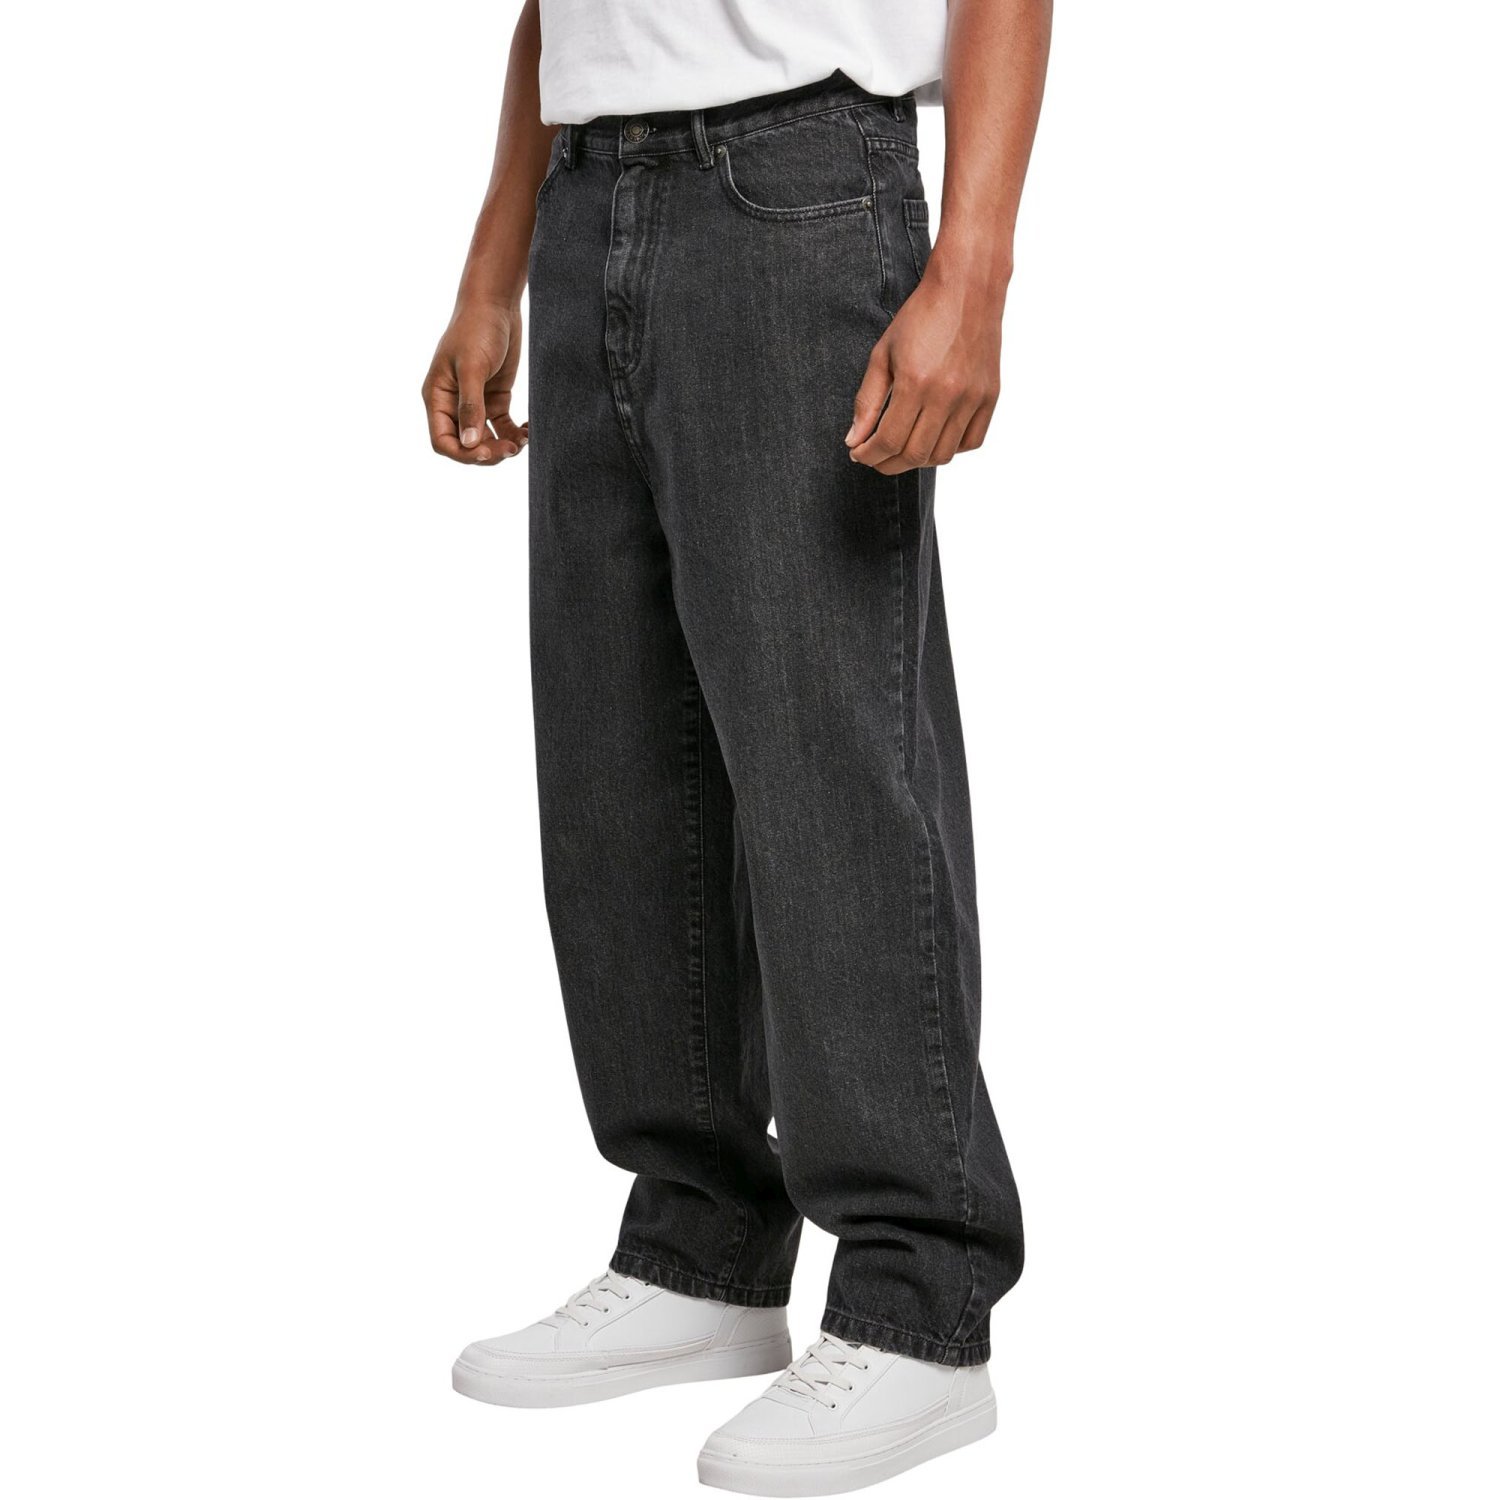 Comfort Stretch Pantalon Homme - Jogpant blanc